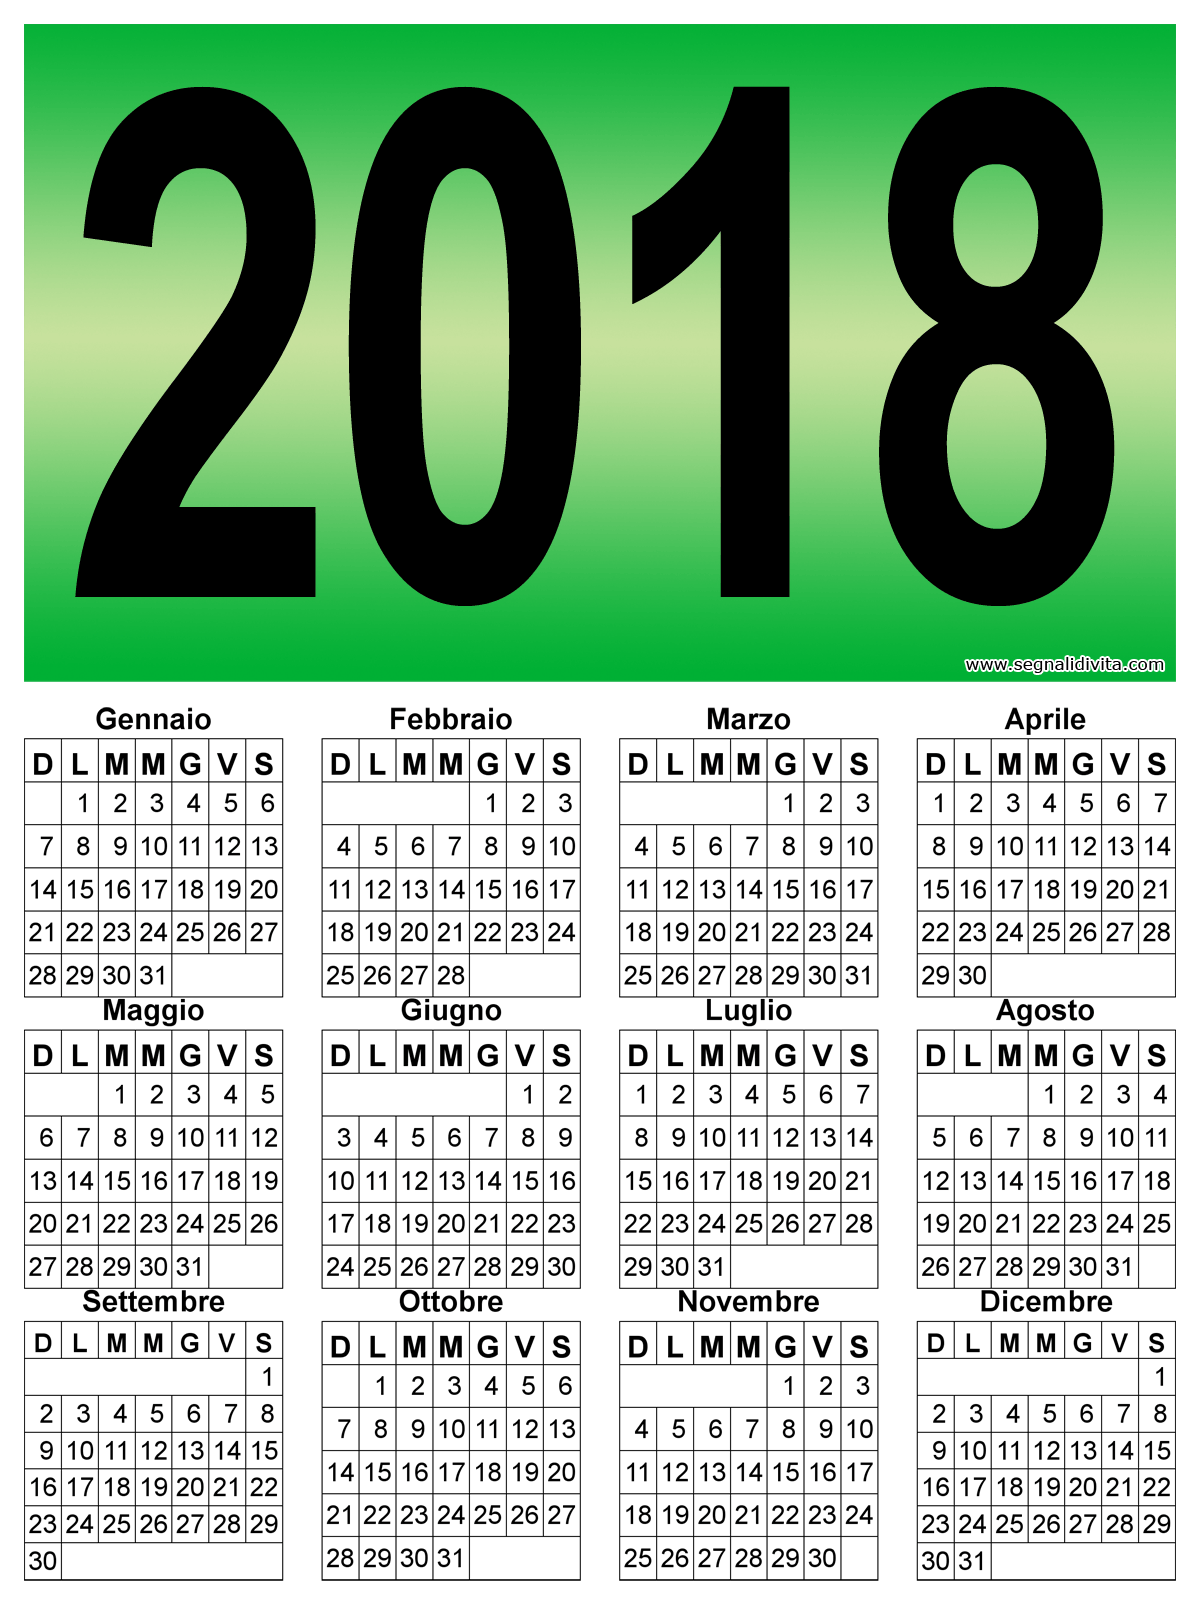 Calendario 2018 medio: 1200 x 1608 pixel